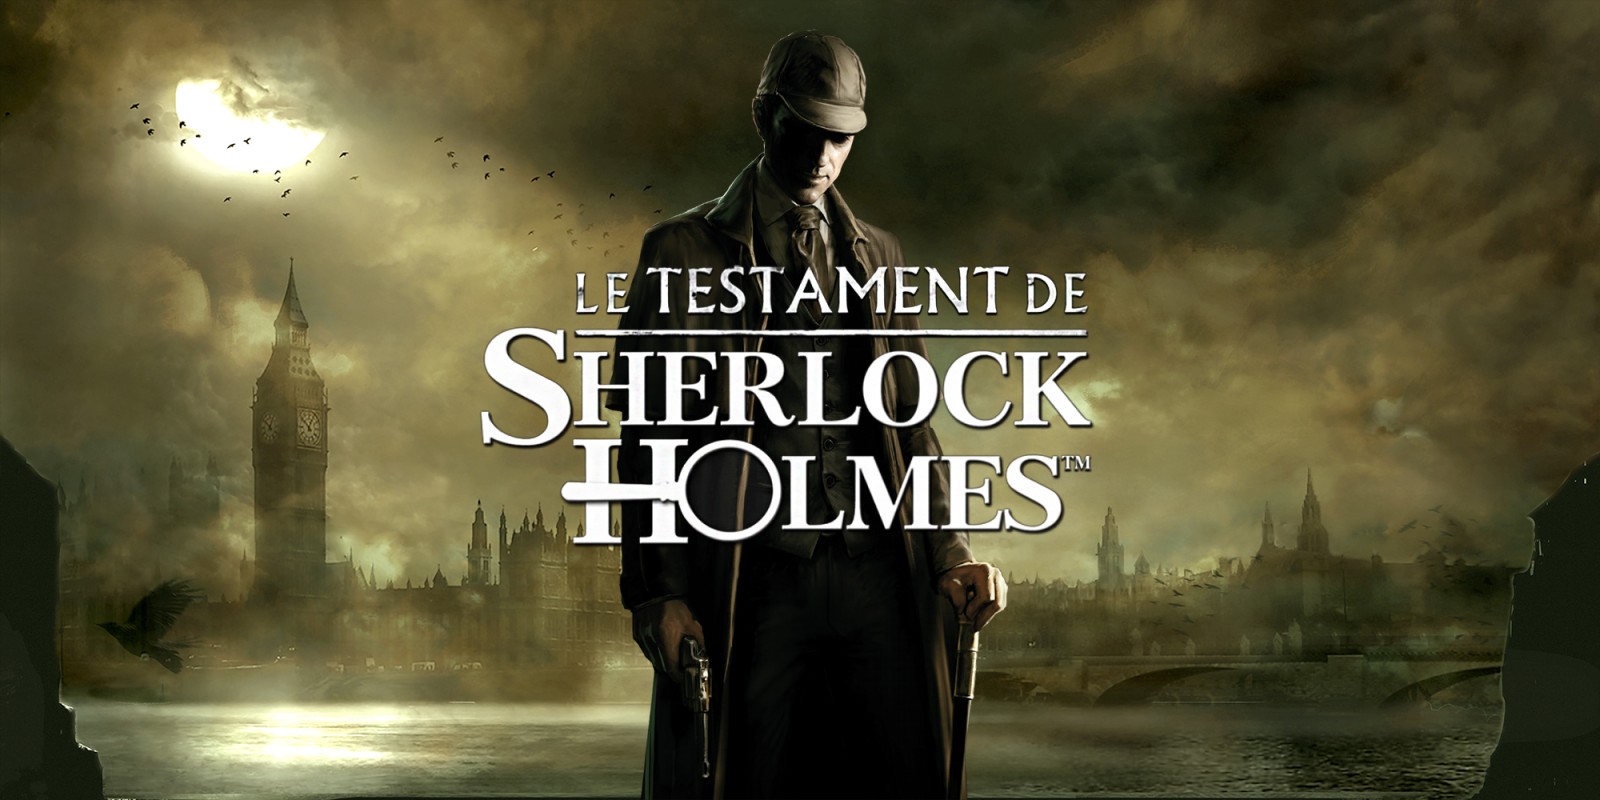 Le testament de Sherlock Holmes